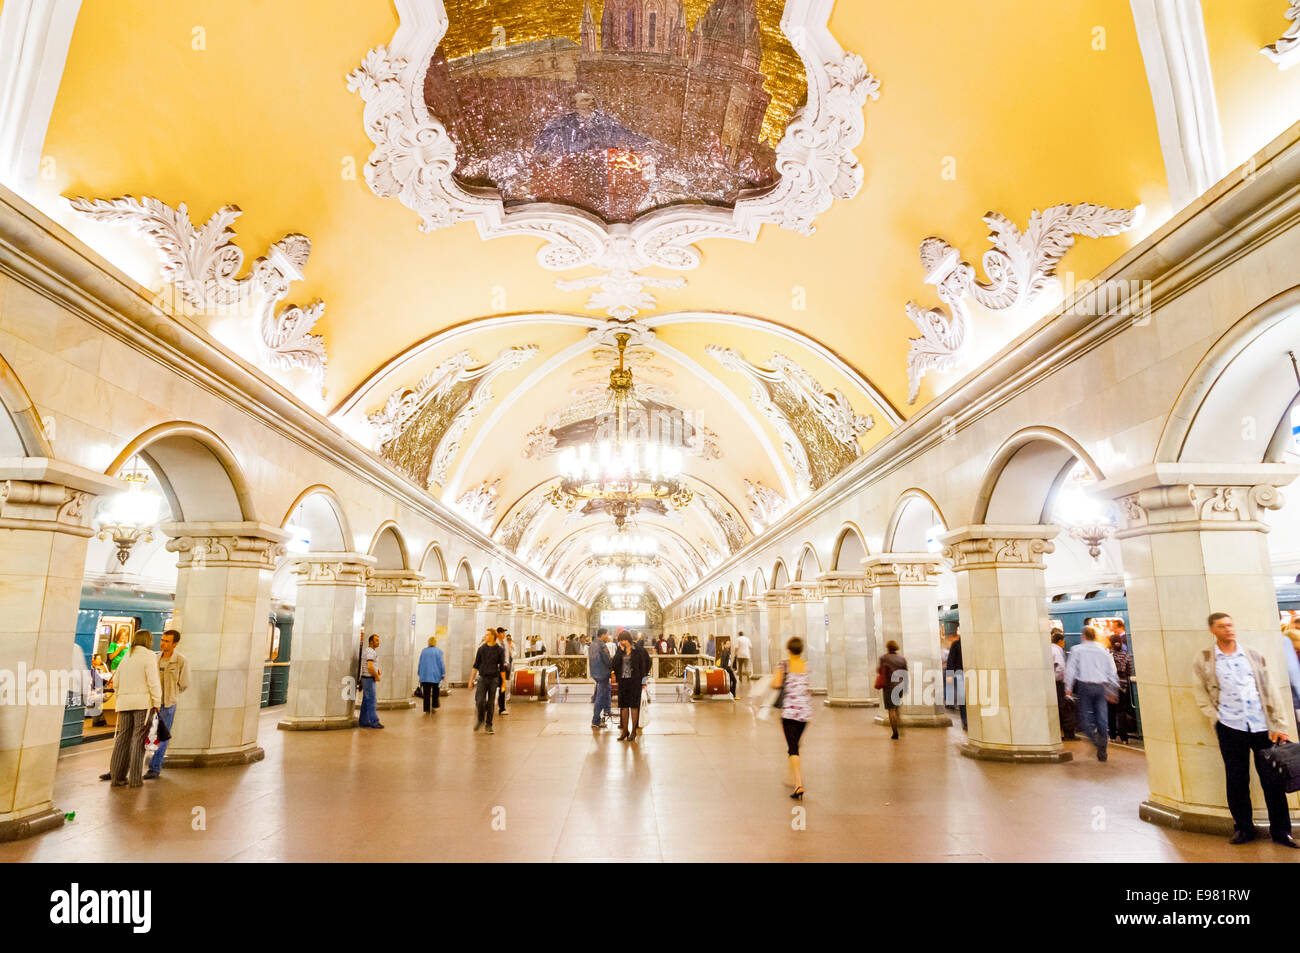 Salle principale de la station de métro Komsomolskaya, Moscou, Russie Banque D'Images